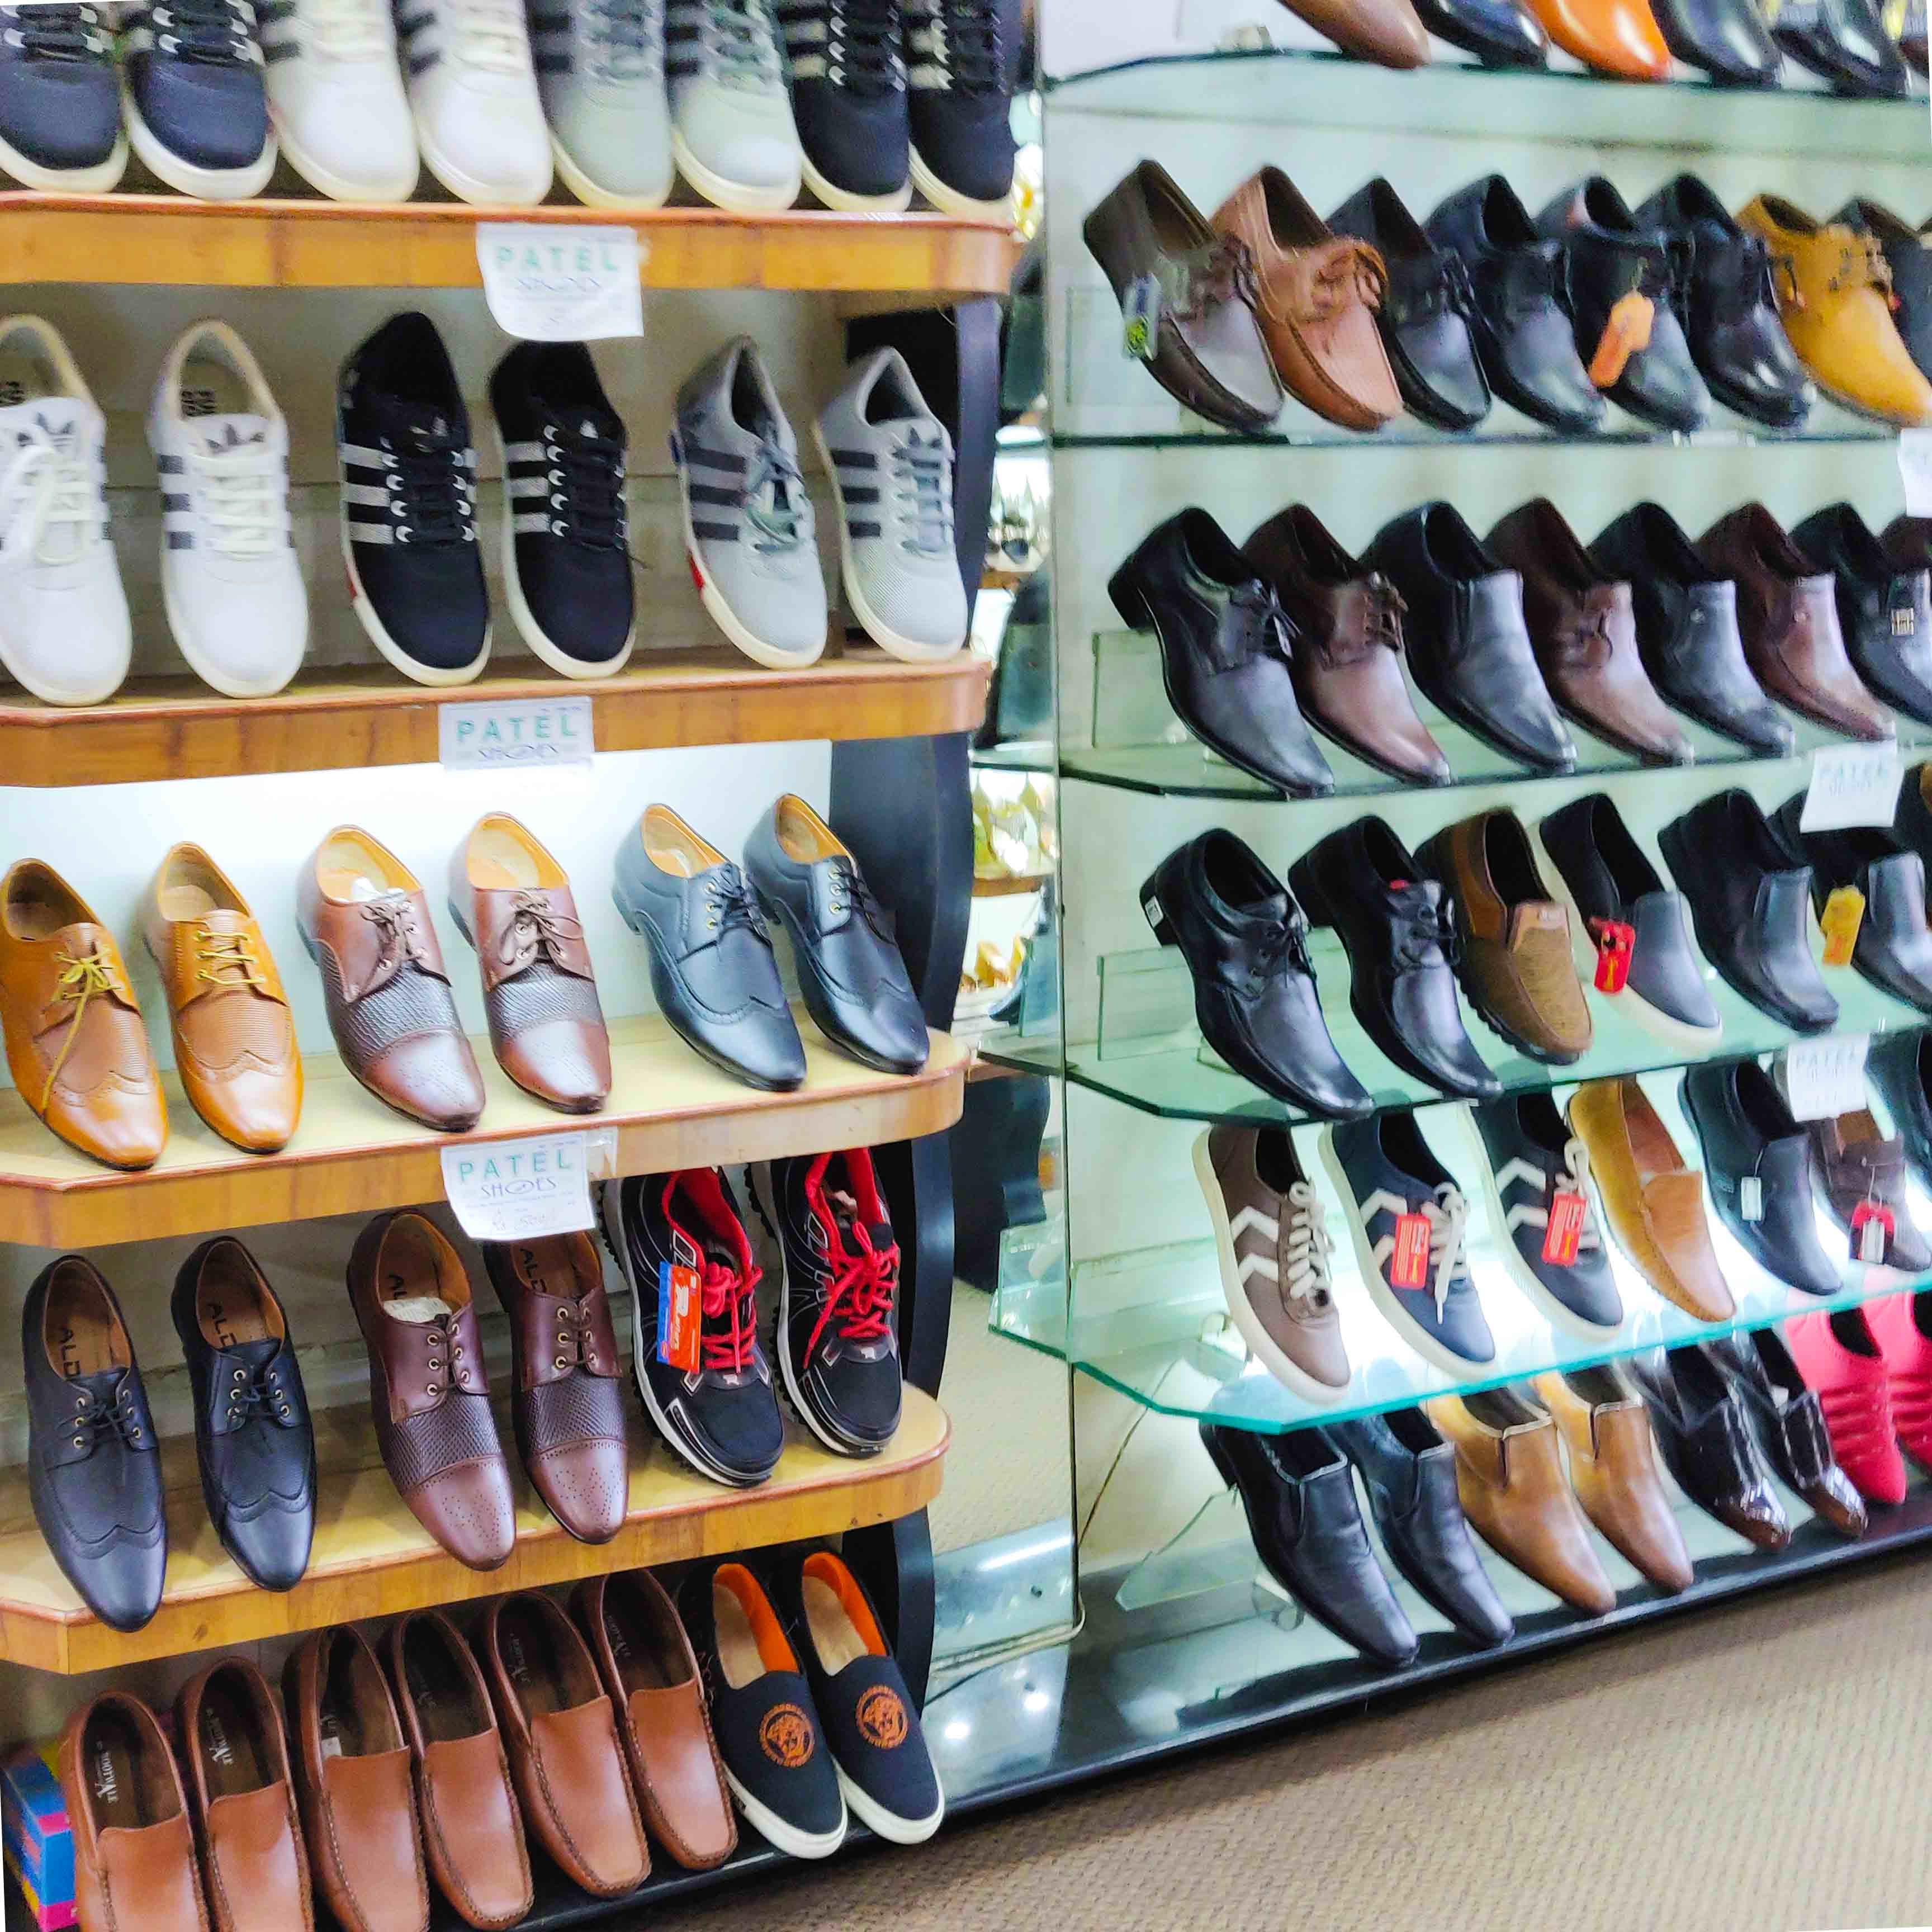 Footwear,Shoe,Shoe store,Collection,Plimsoll shoe,Shoe organizer,Athletic shoe